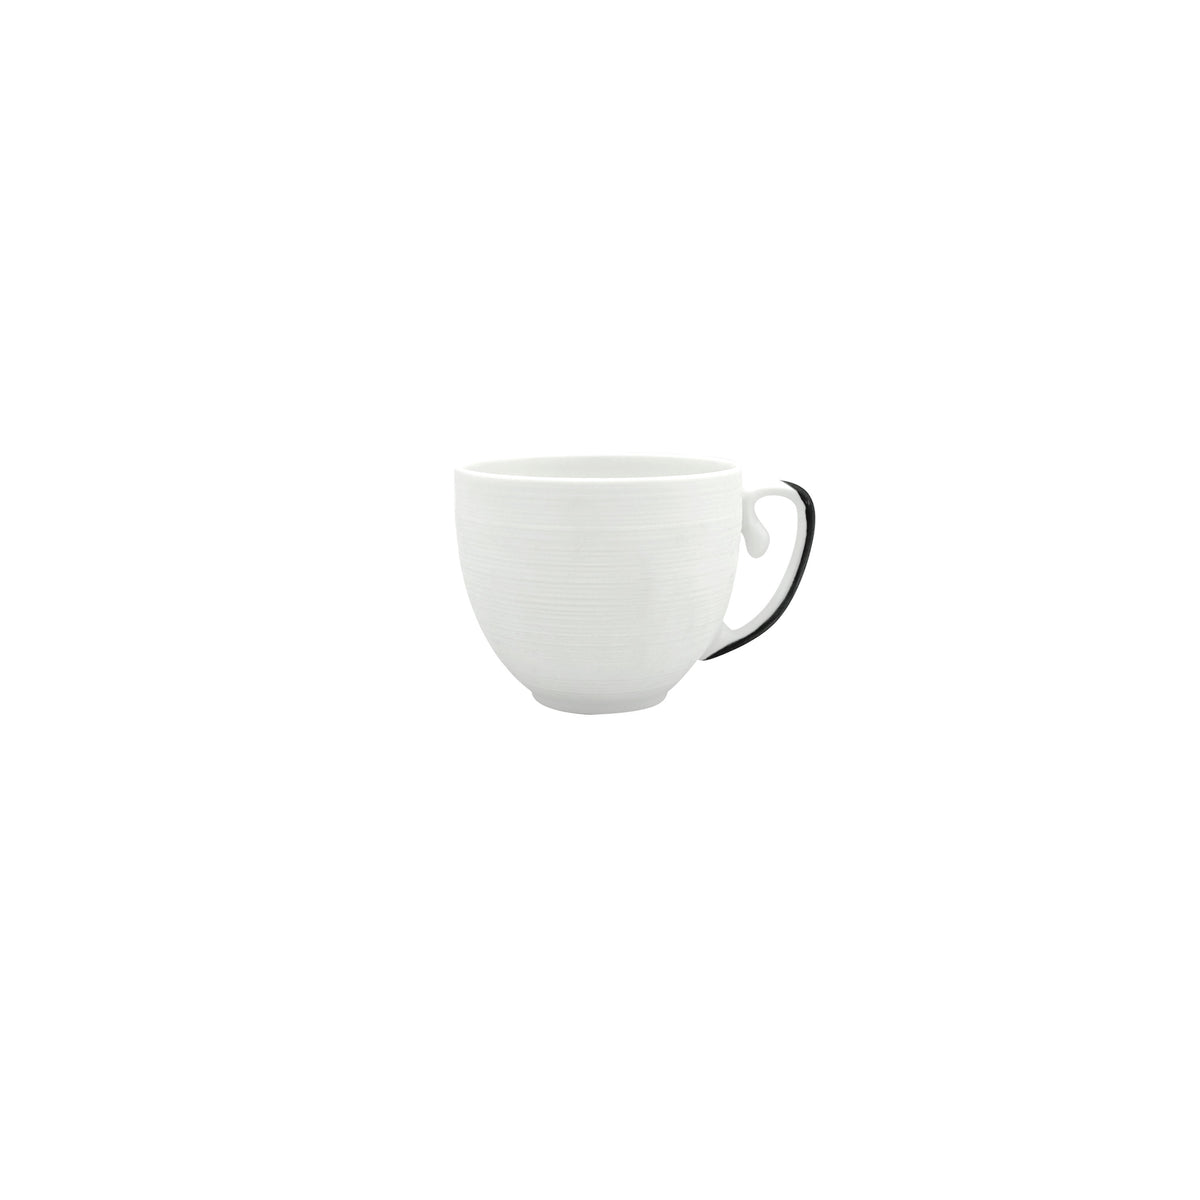 HEMISPHERE Black Bakelite - Coffee set (cup & saucer)